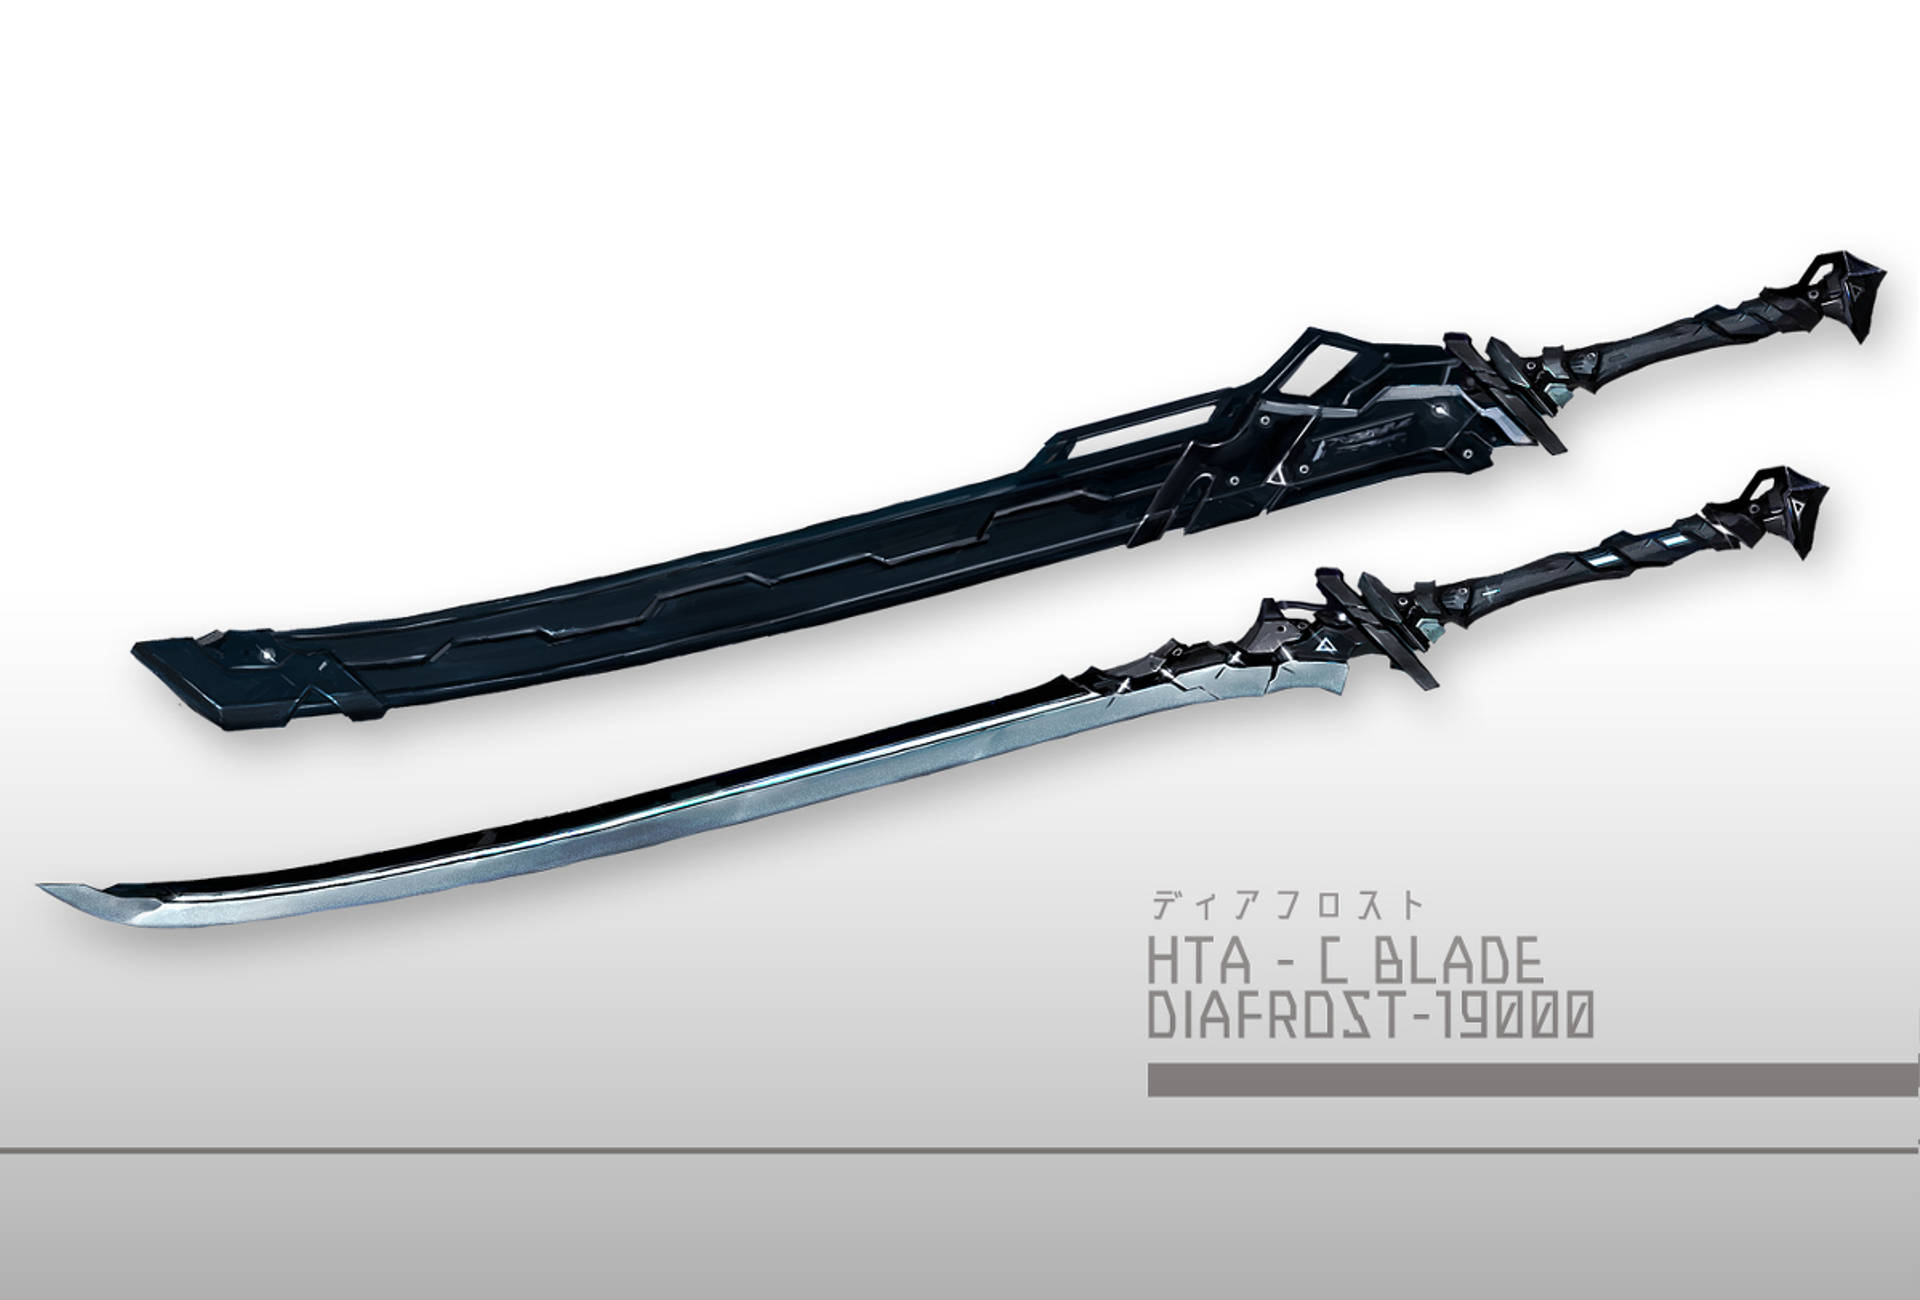 HTA-C Blade Diafrost Sword Wallpaper